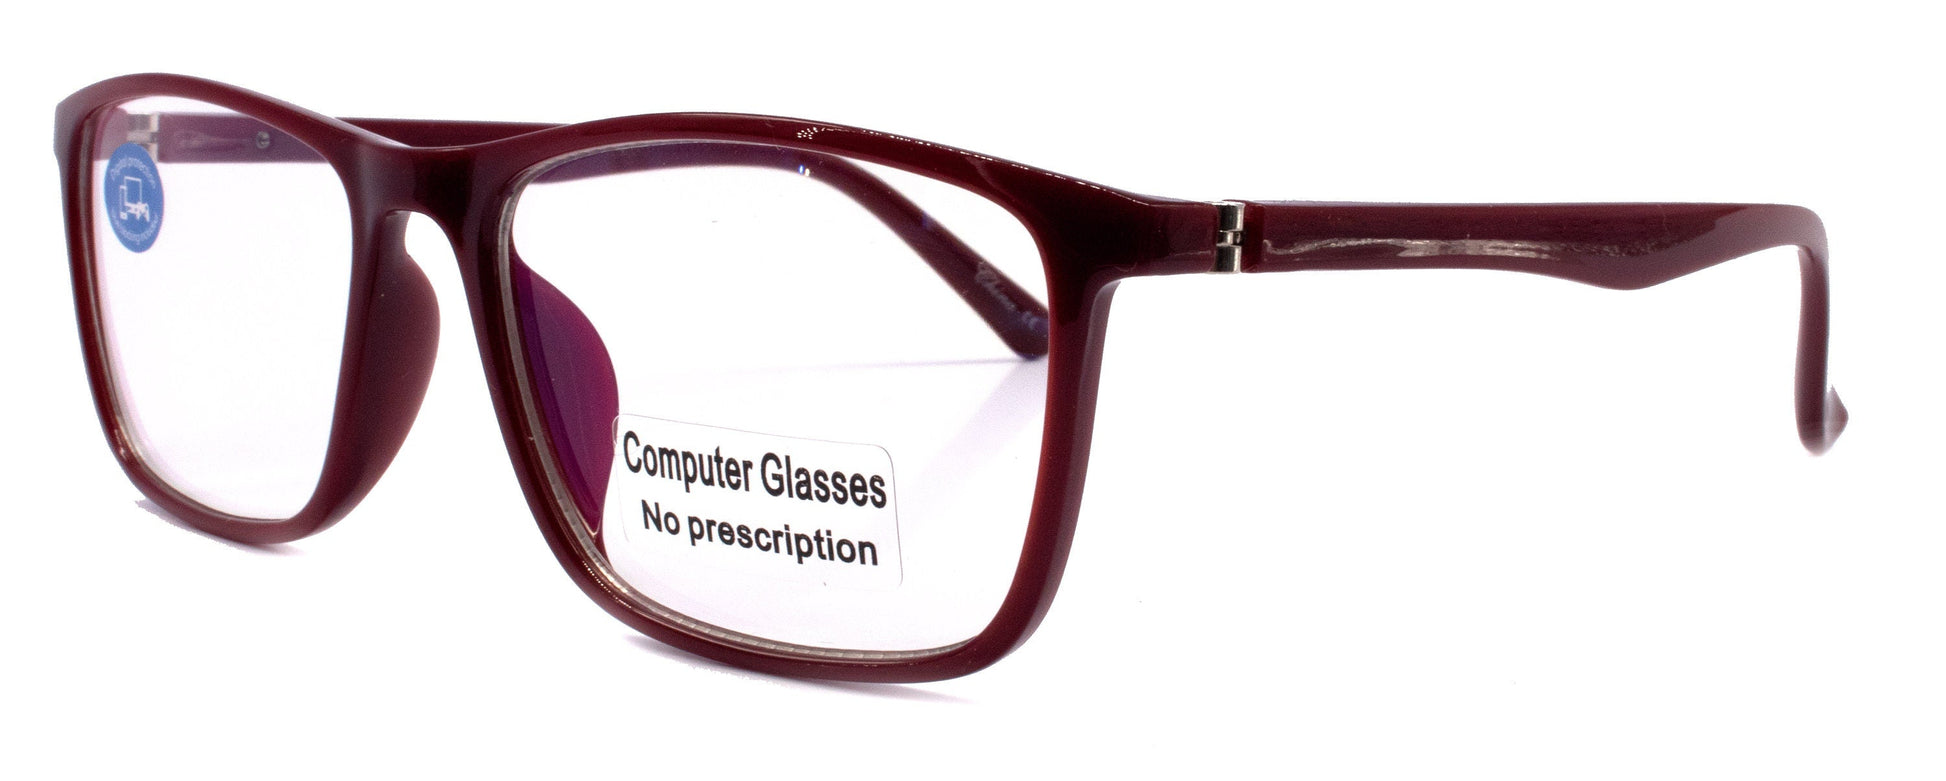 Vista, (Blue Light Glasses) w AR Coating (Anti Glare) Filter, (Burgundy, Square) Reading Glasses, No prescription, Gamers NY Fifth Avenue 